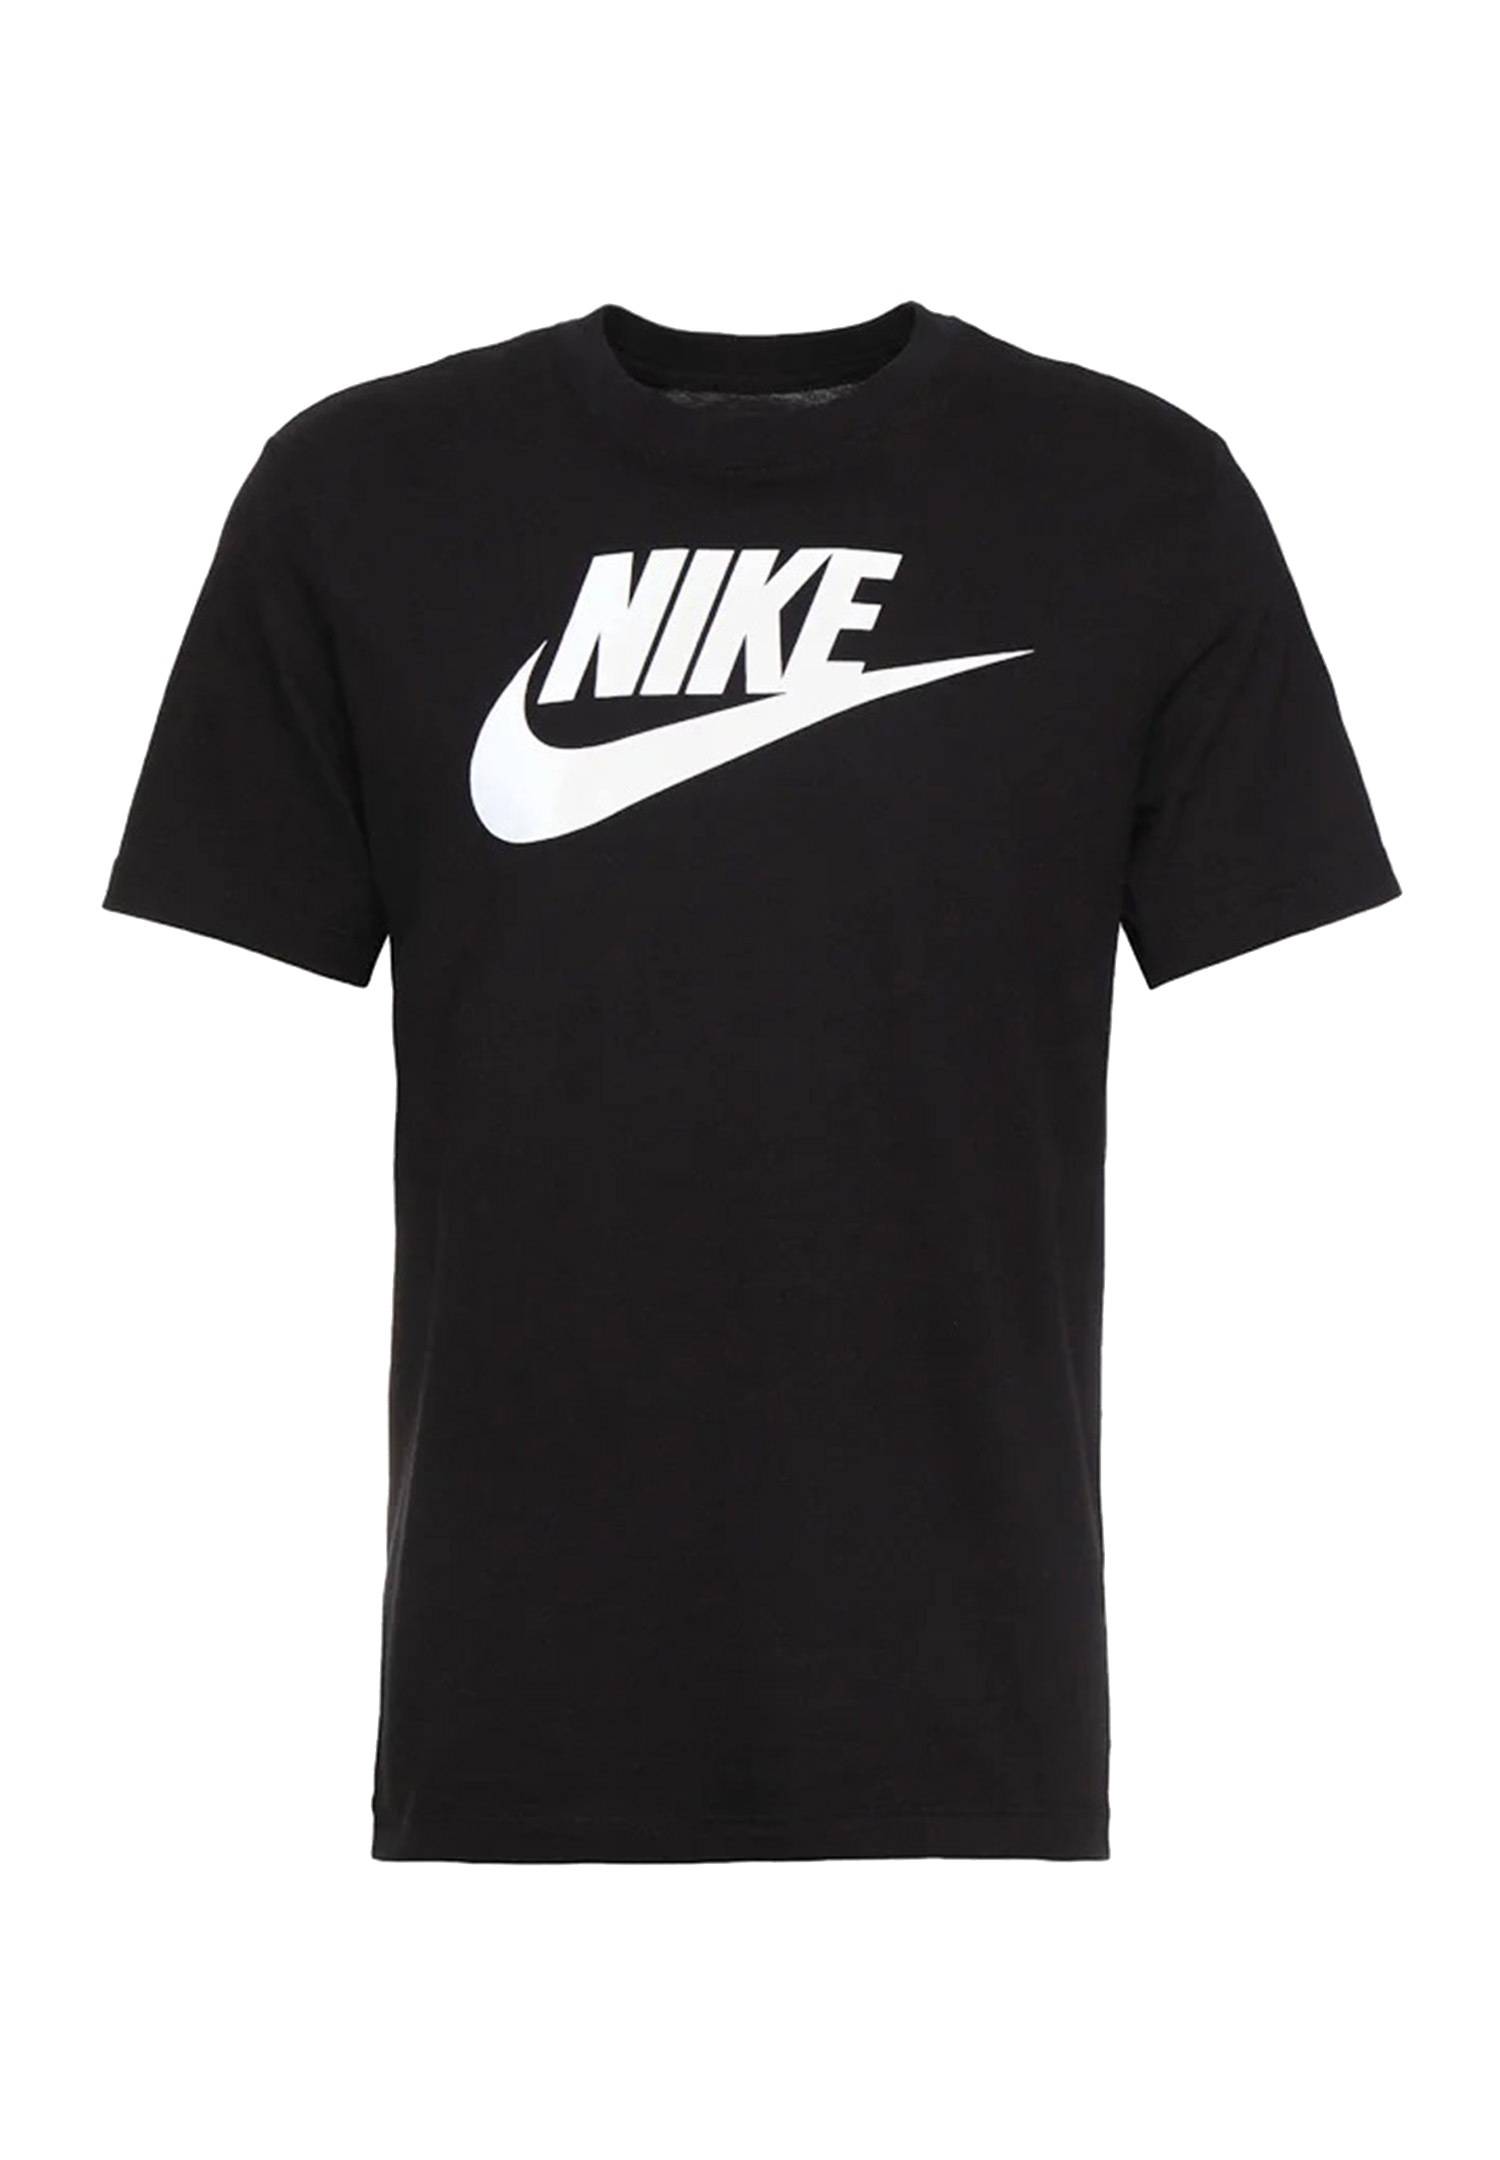 Nike Sportswear Tee Herren Tshirt Shirt schwarz AR5004